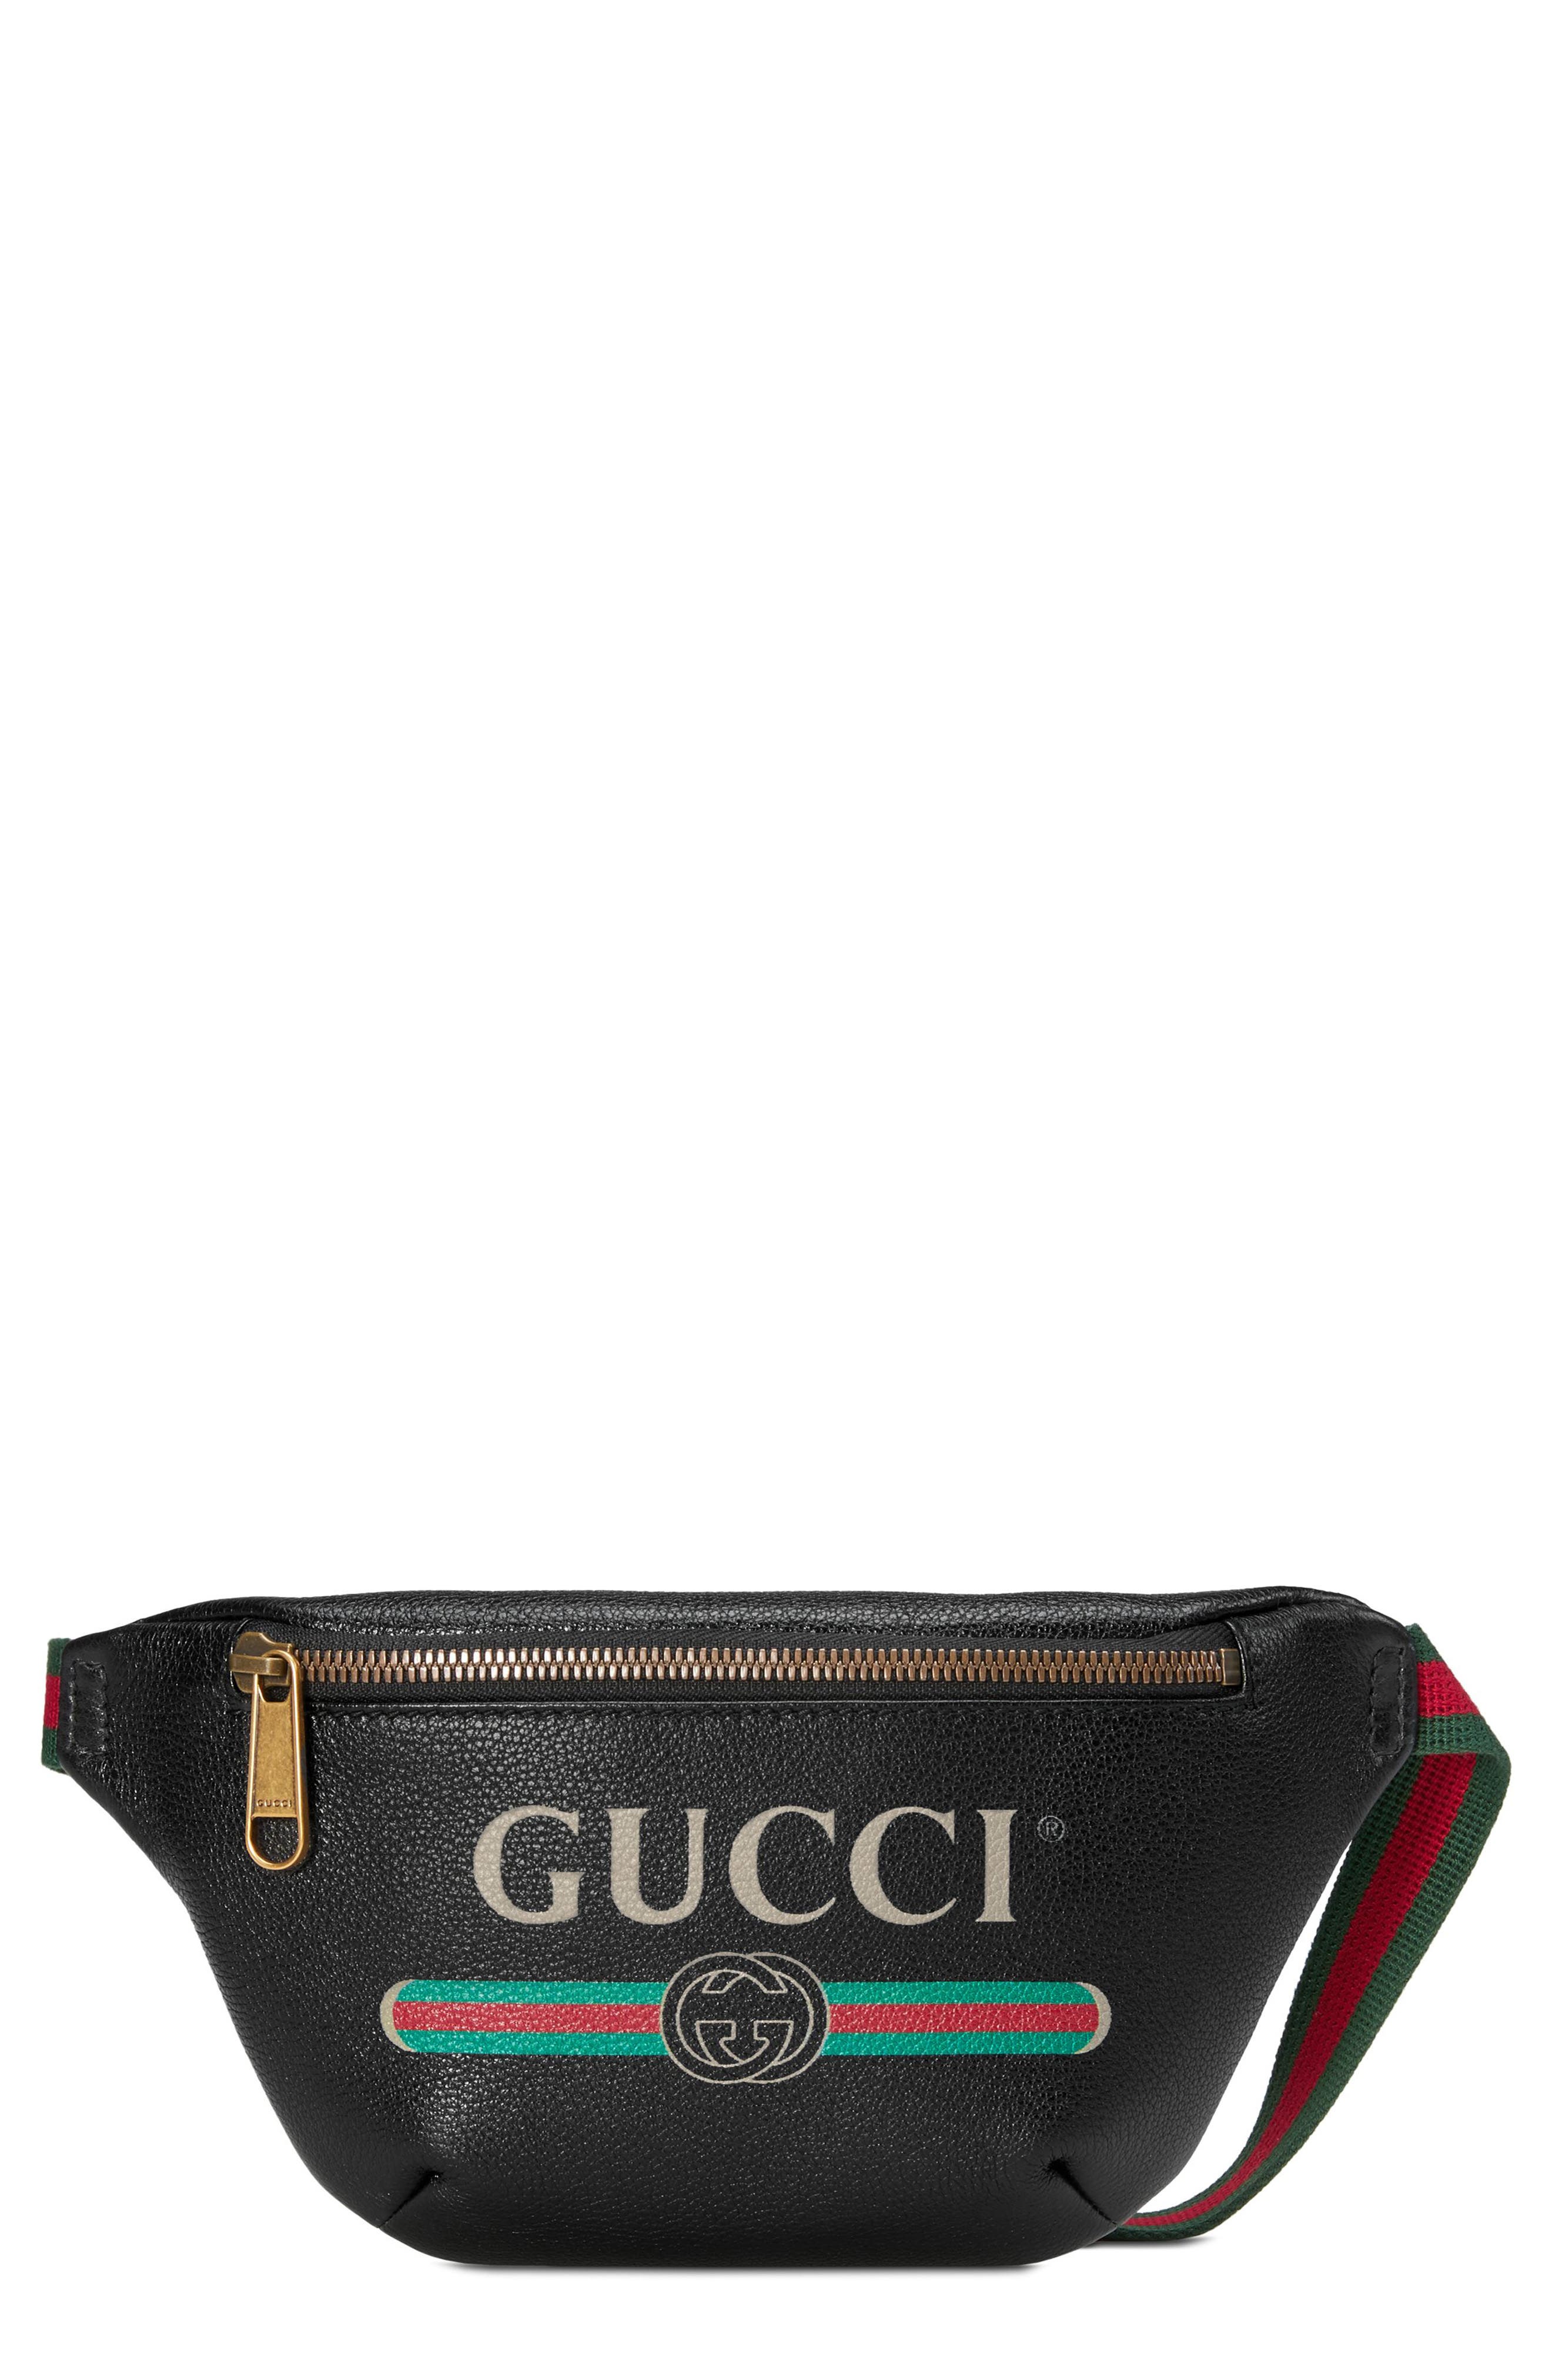 gucci belt bags on sale